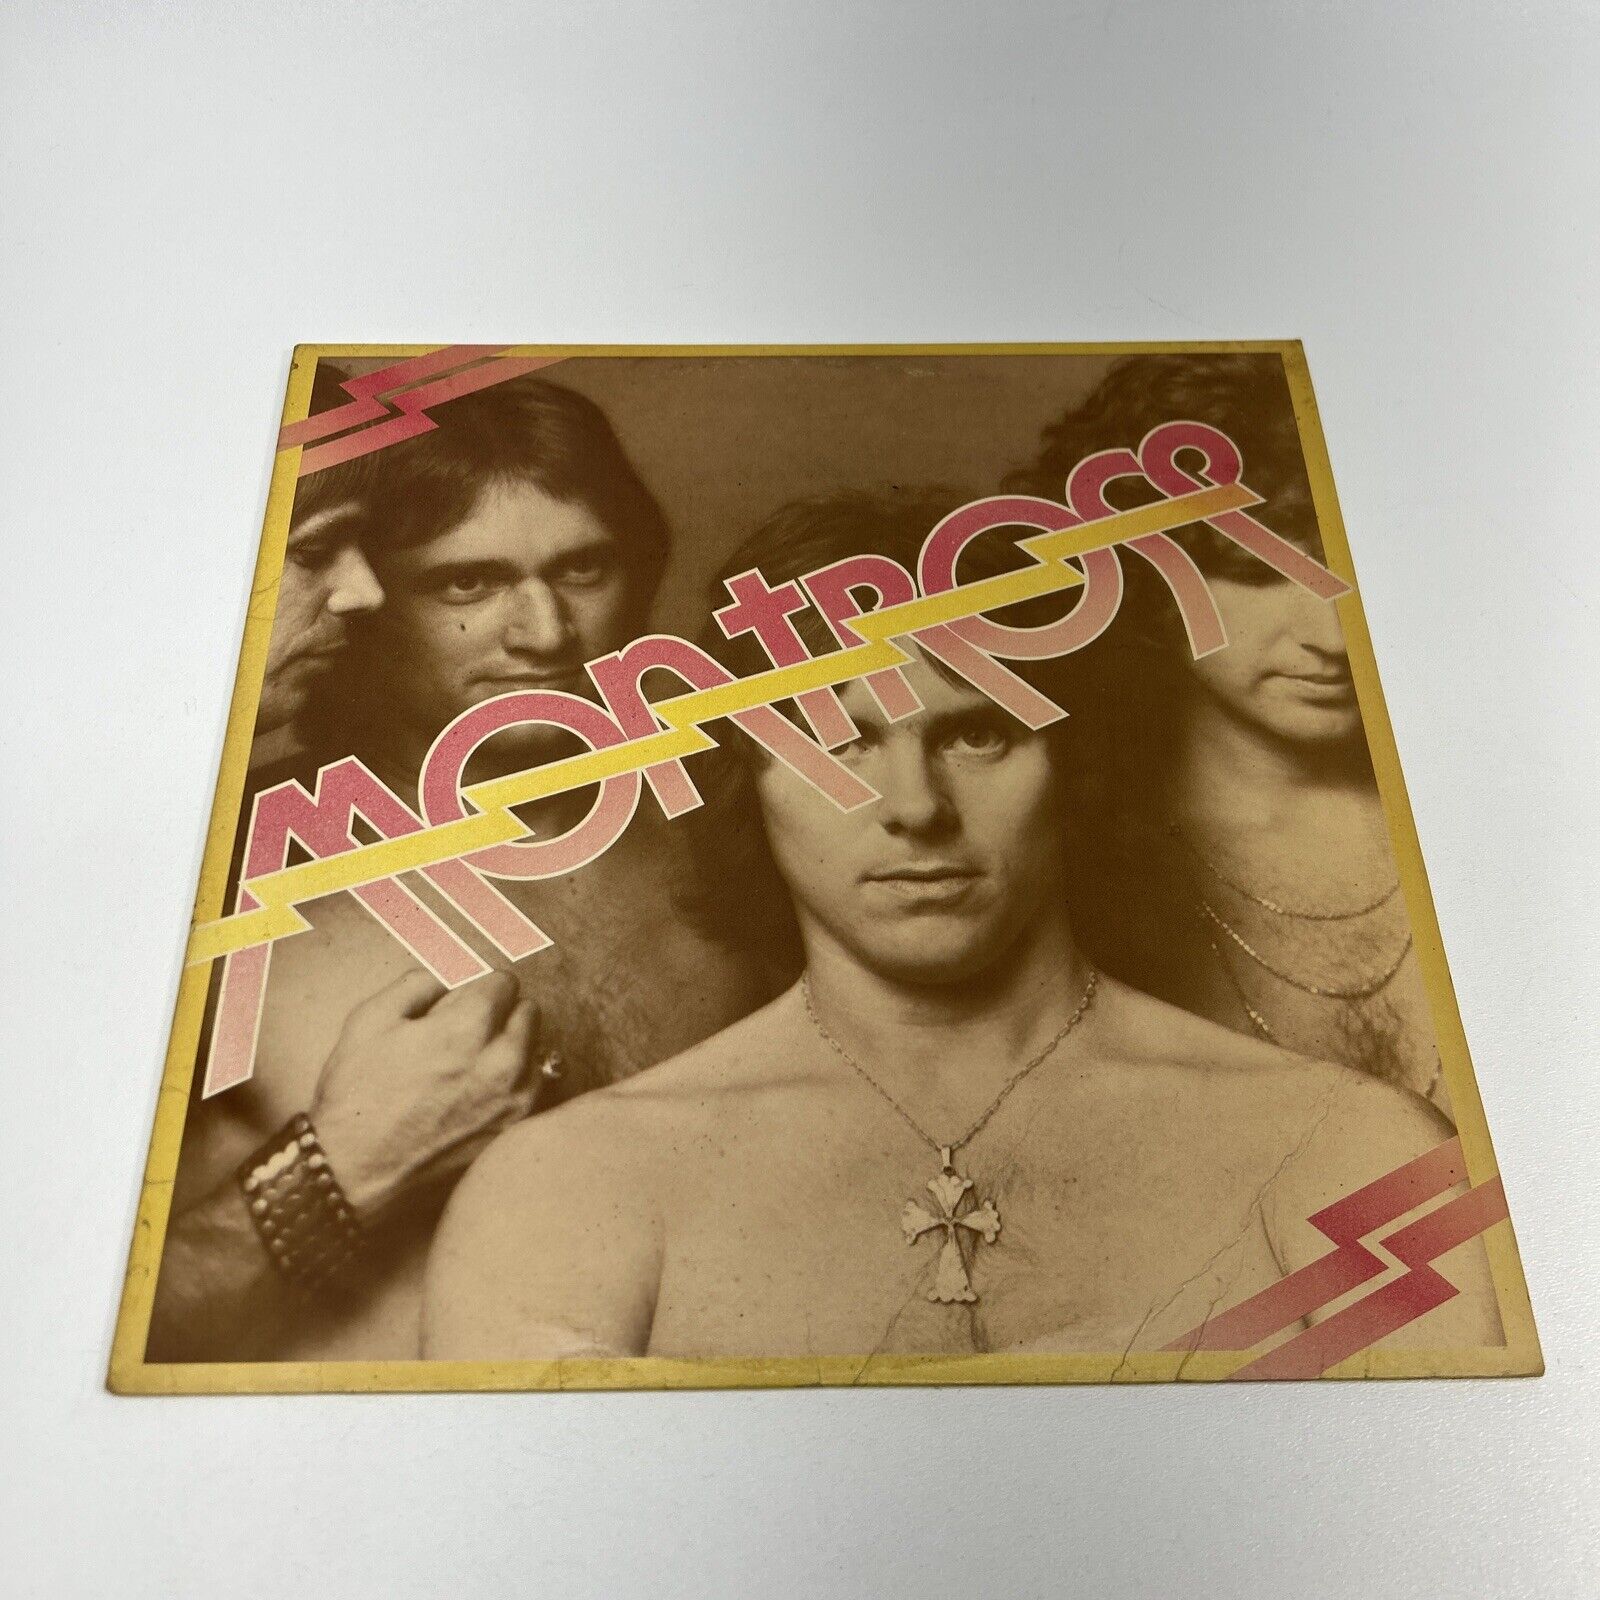 Montrose, Self-Titled, 12” Vinyl Record